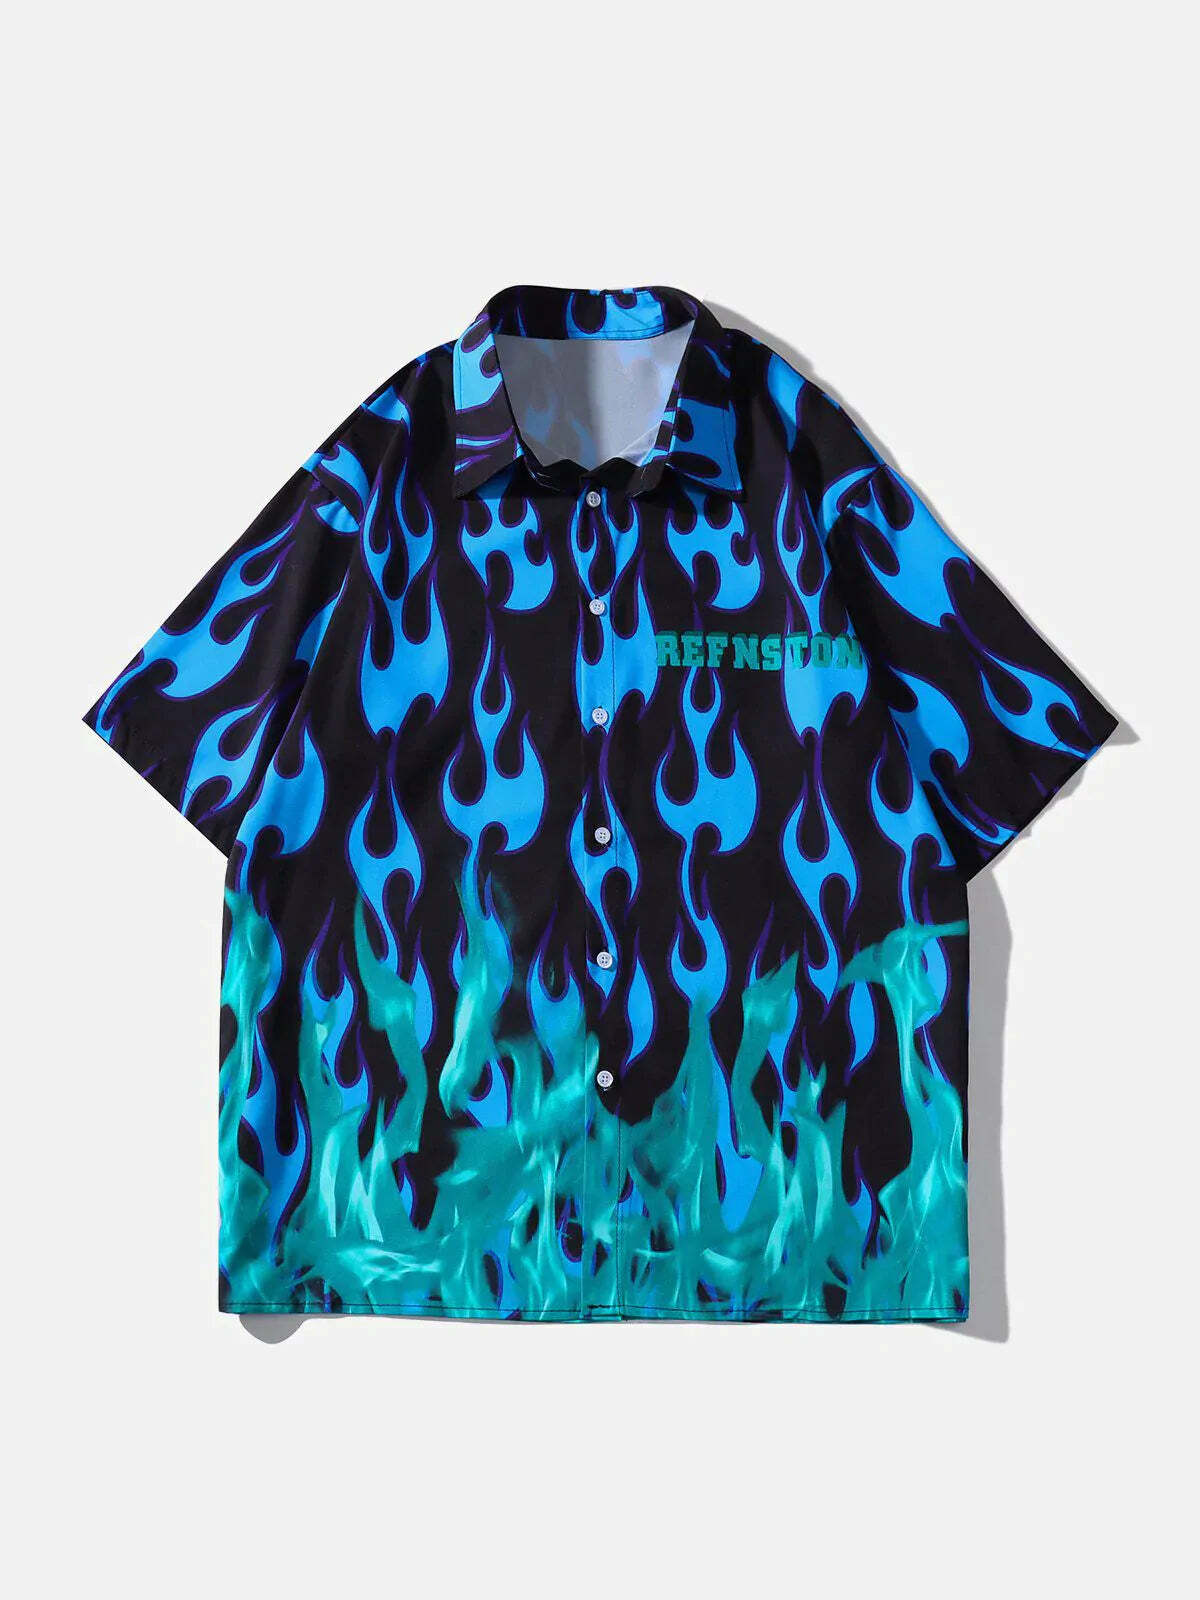 dynamic flame print shirt edgy  retro streetwear staple 2128